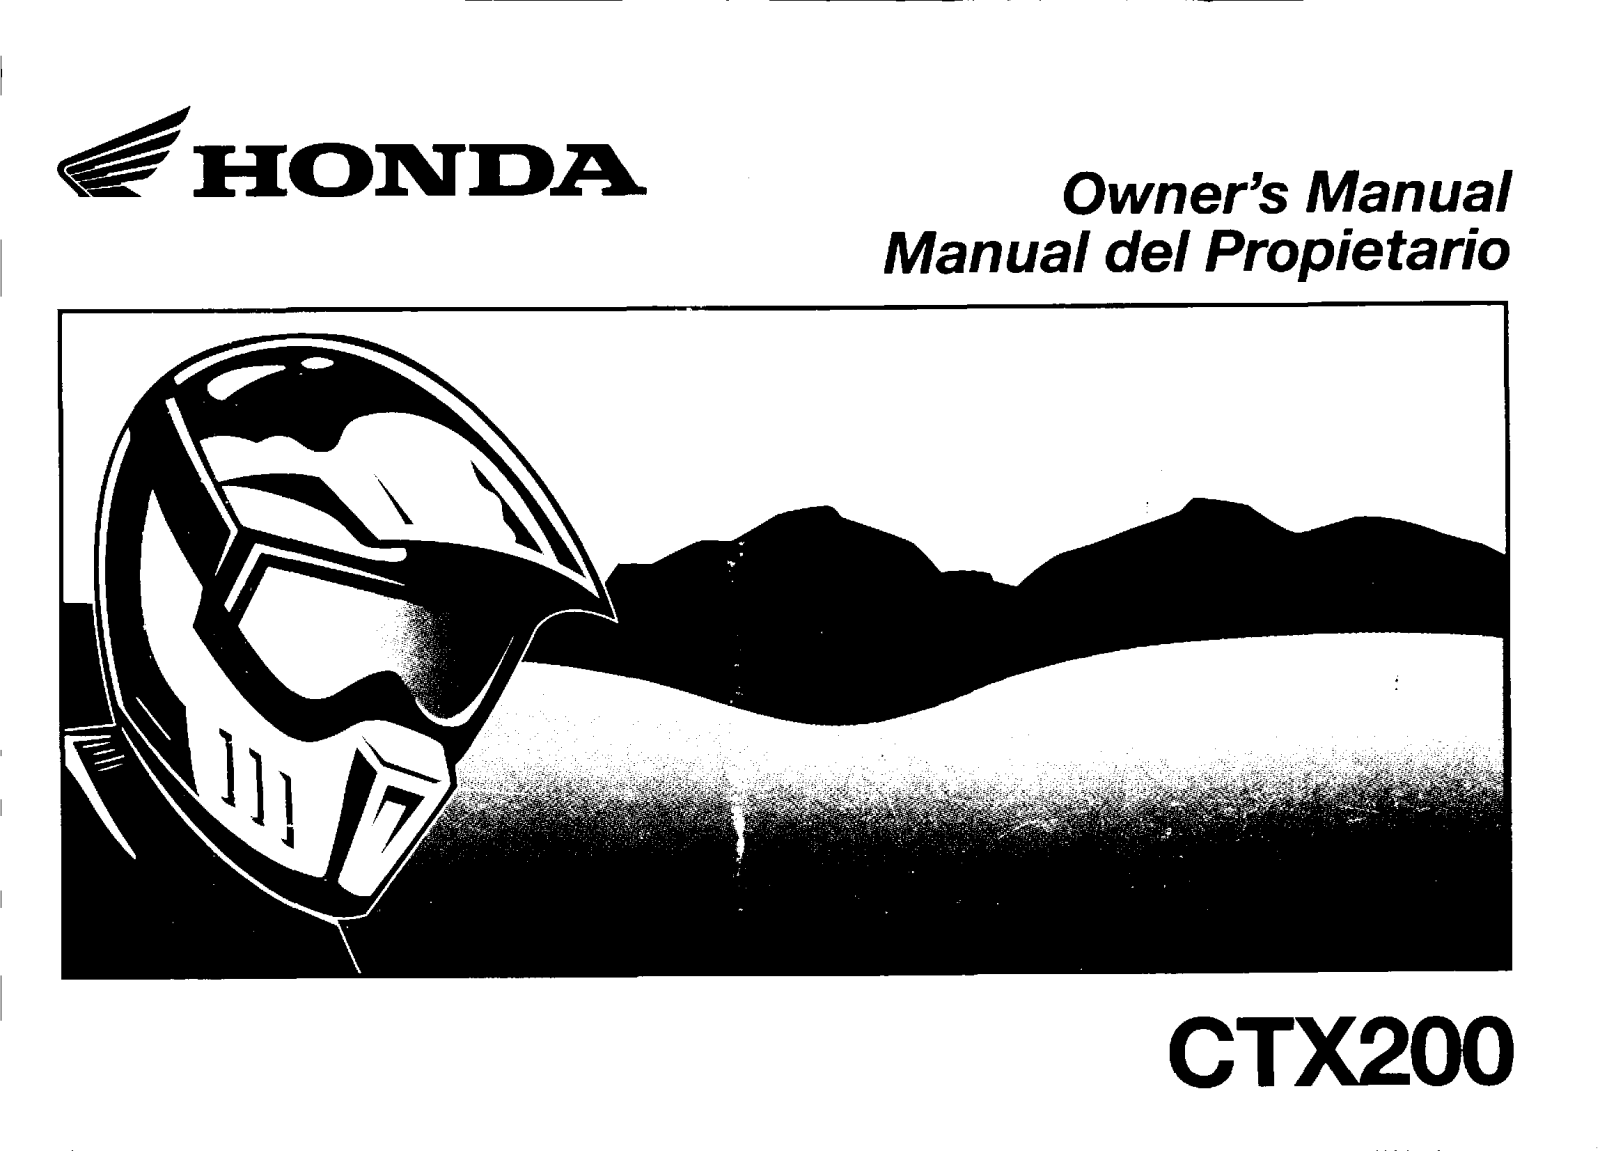 Honda CTX200 Owner's Manual